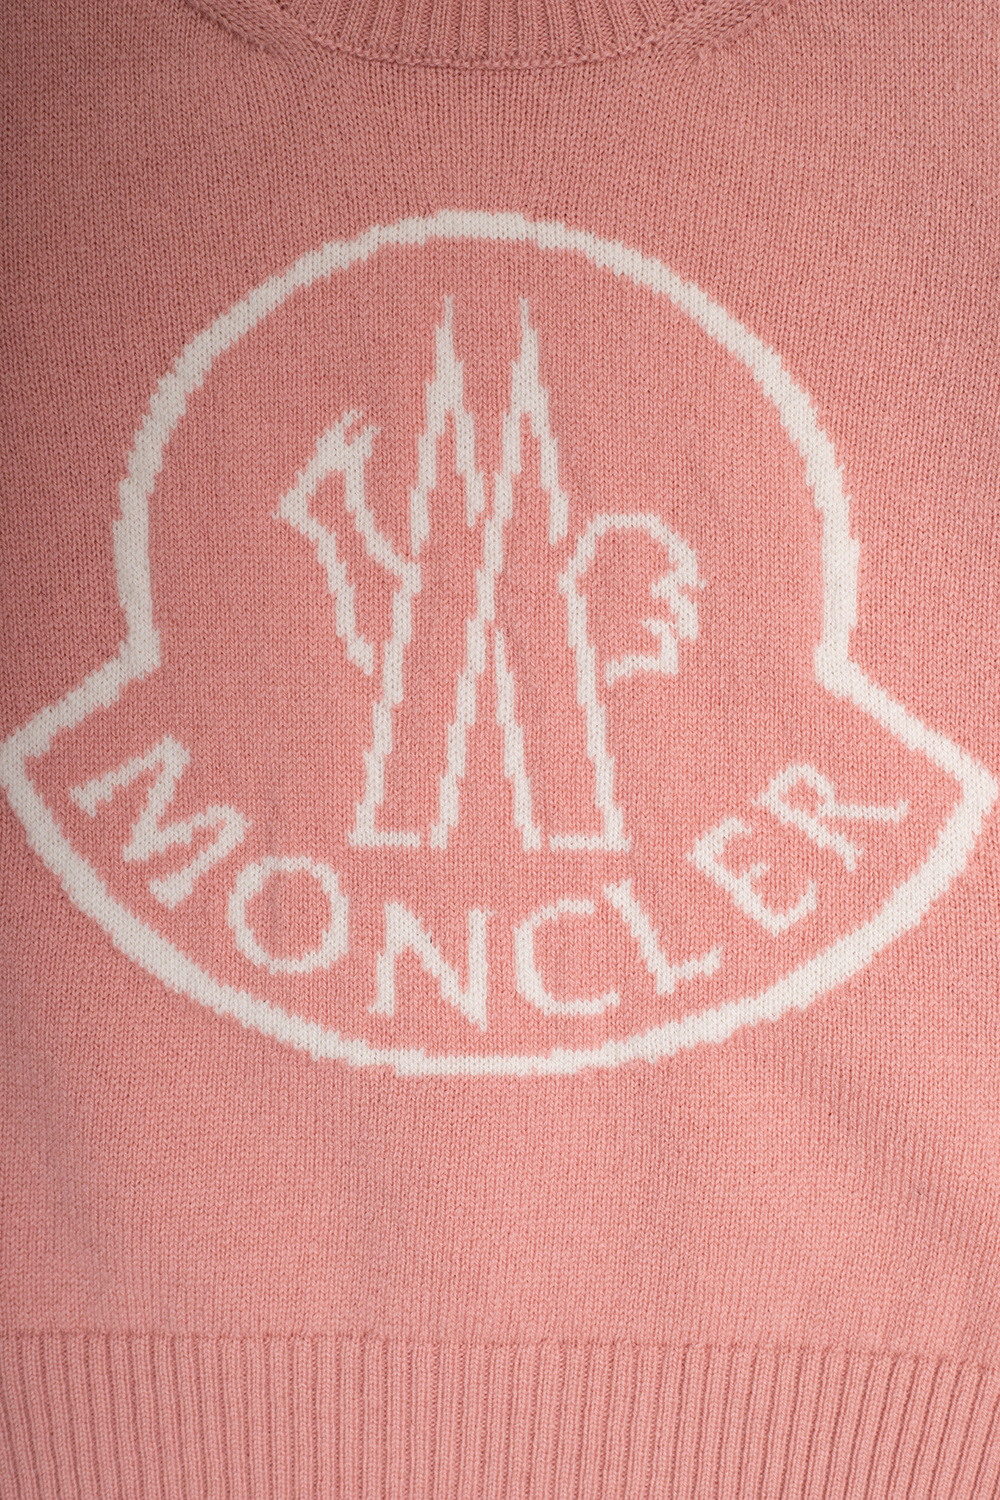 Moncler Enfant For TOG24 Womens Cream Anisa Sweatshirt